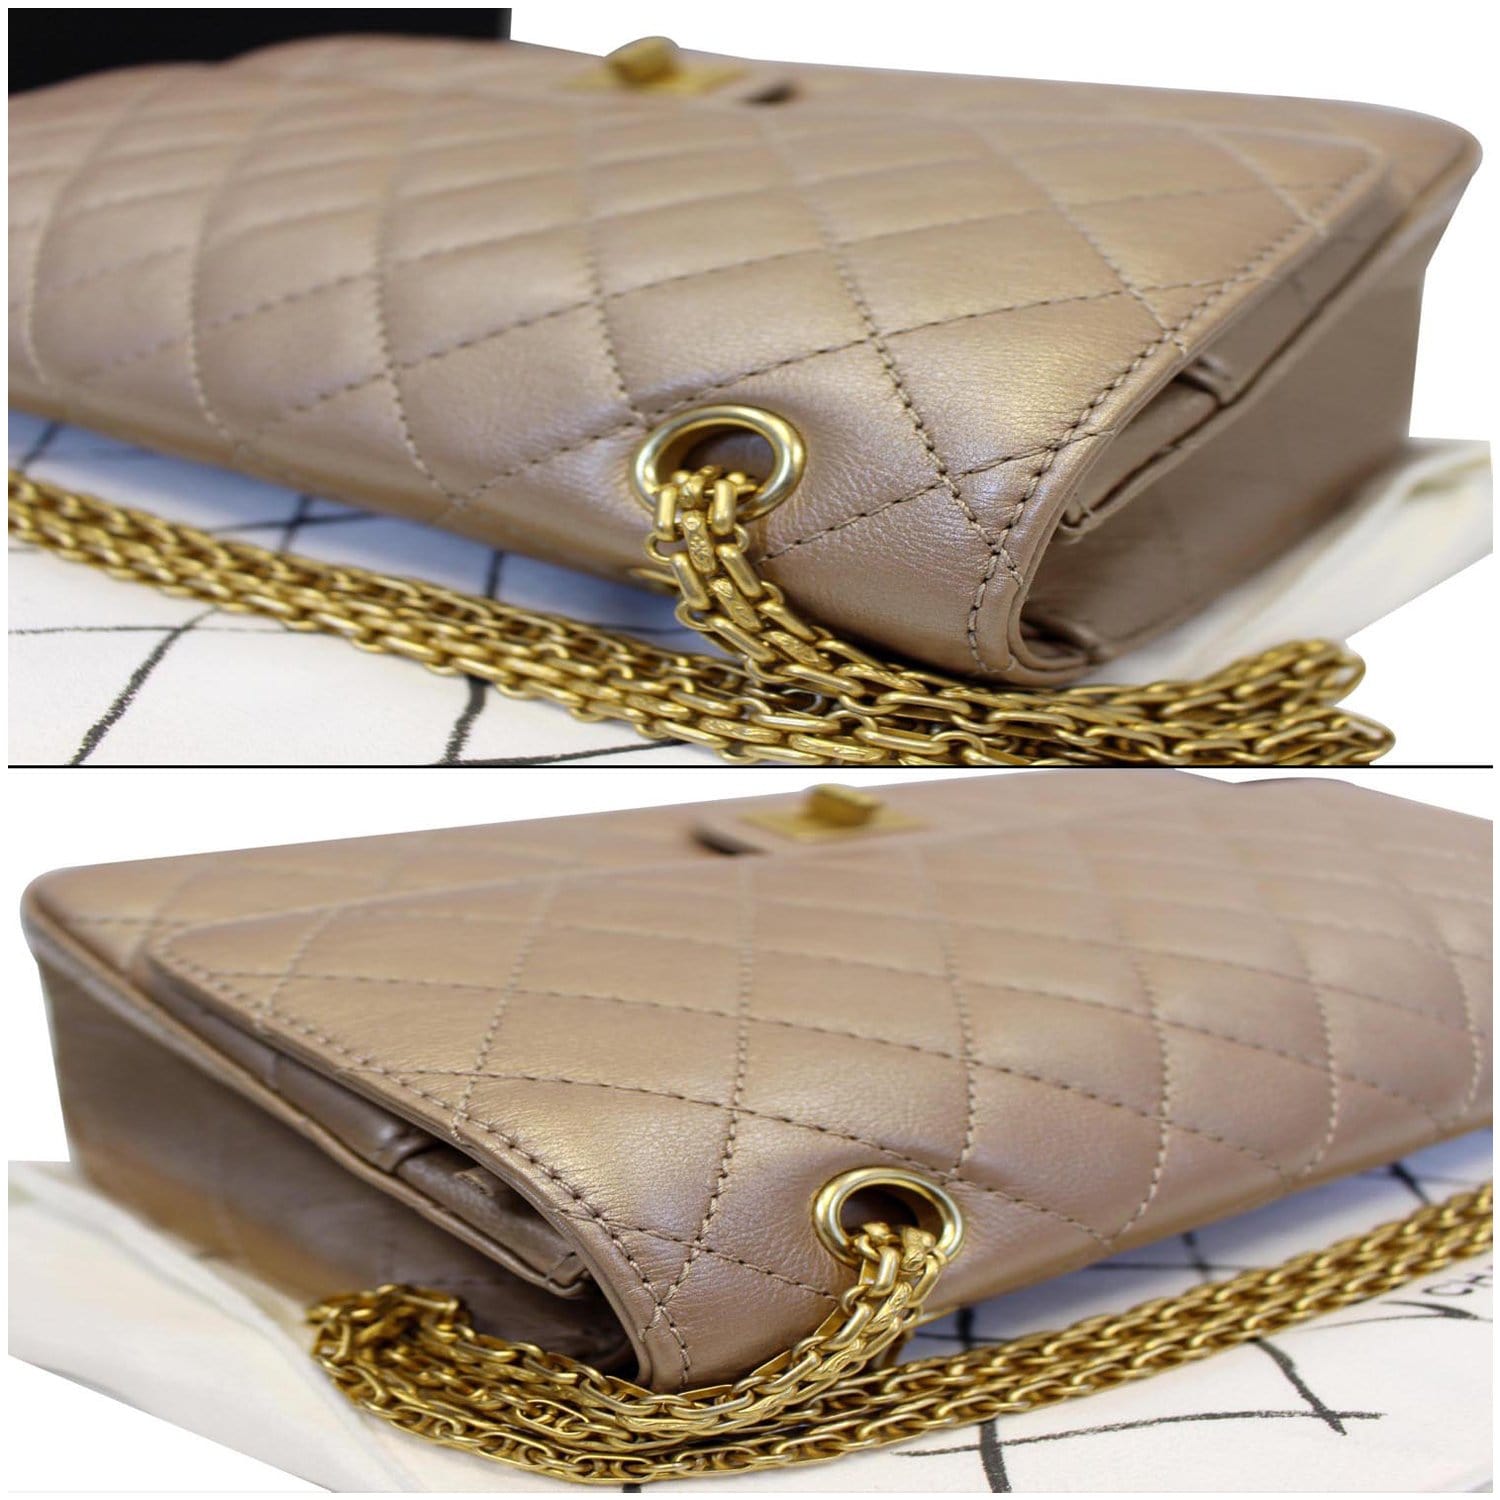 CHANEL Reissue Mademoiselle Lock Calfskin Leather Shoulder Bag Beige-US